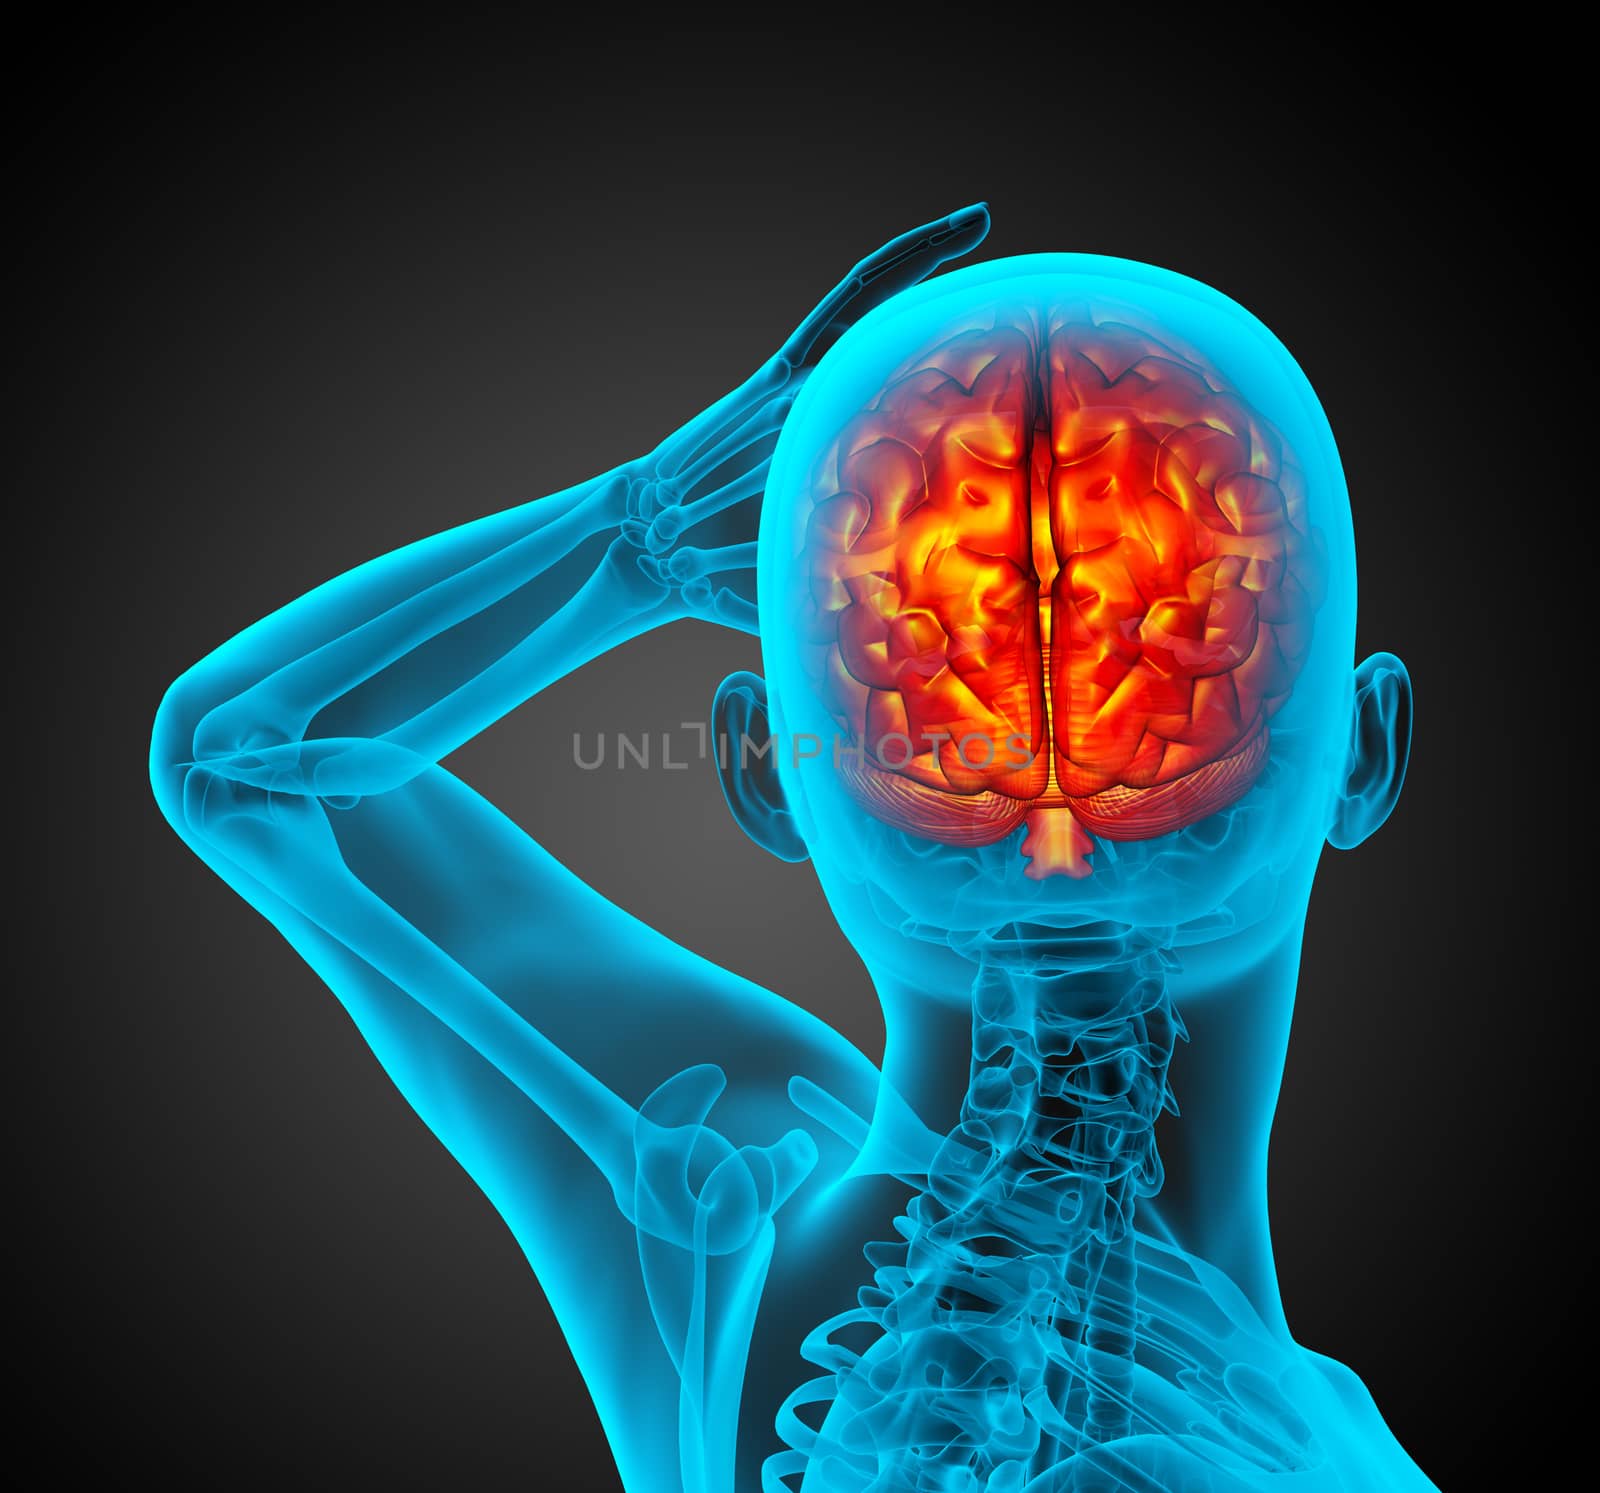 3d render medical illustration of the human brain - back view